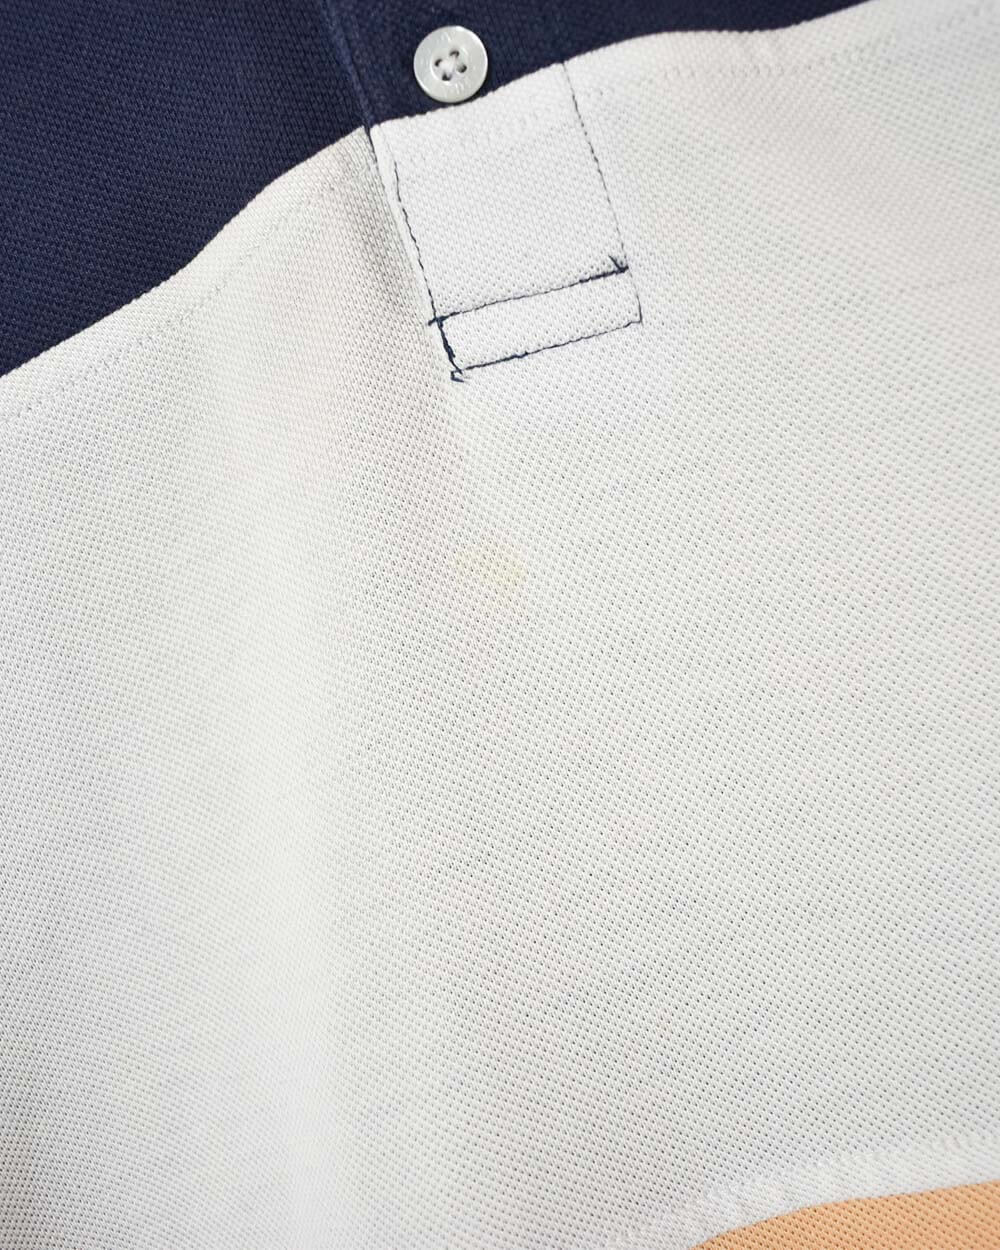 Navy Yves Saint Laurent Polo Shirt - Large